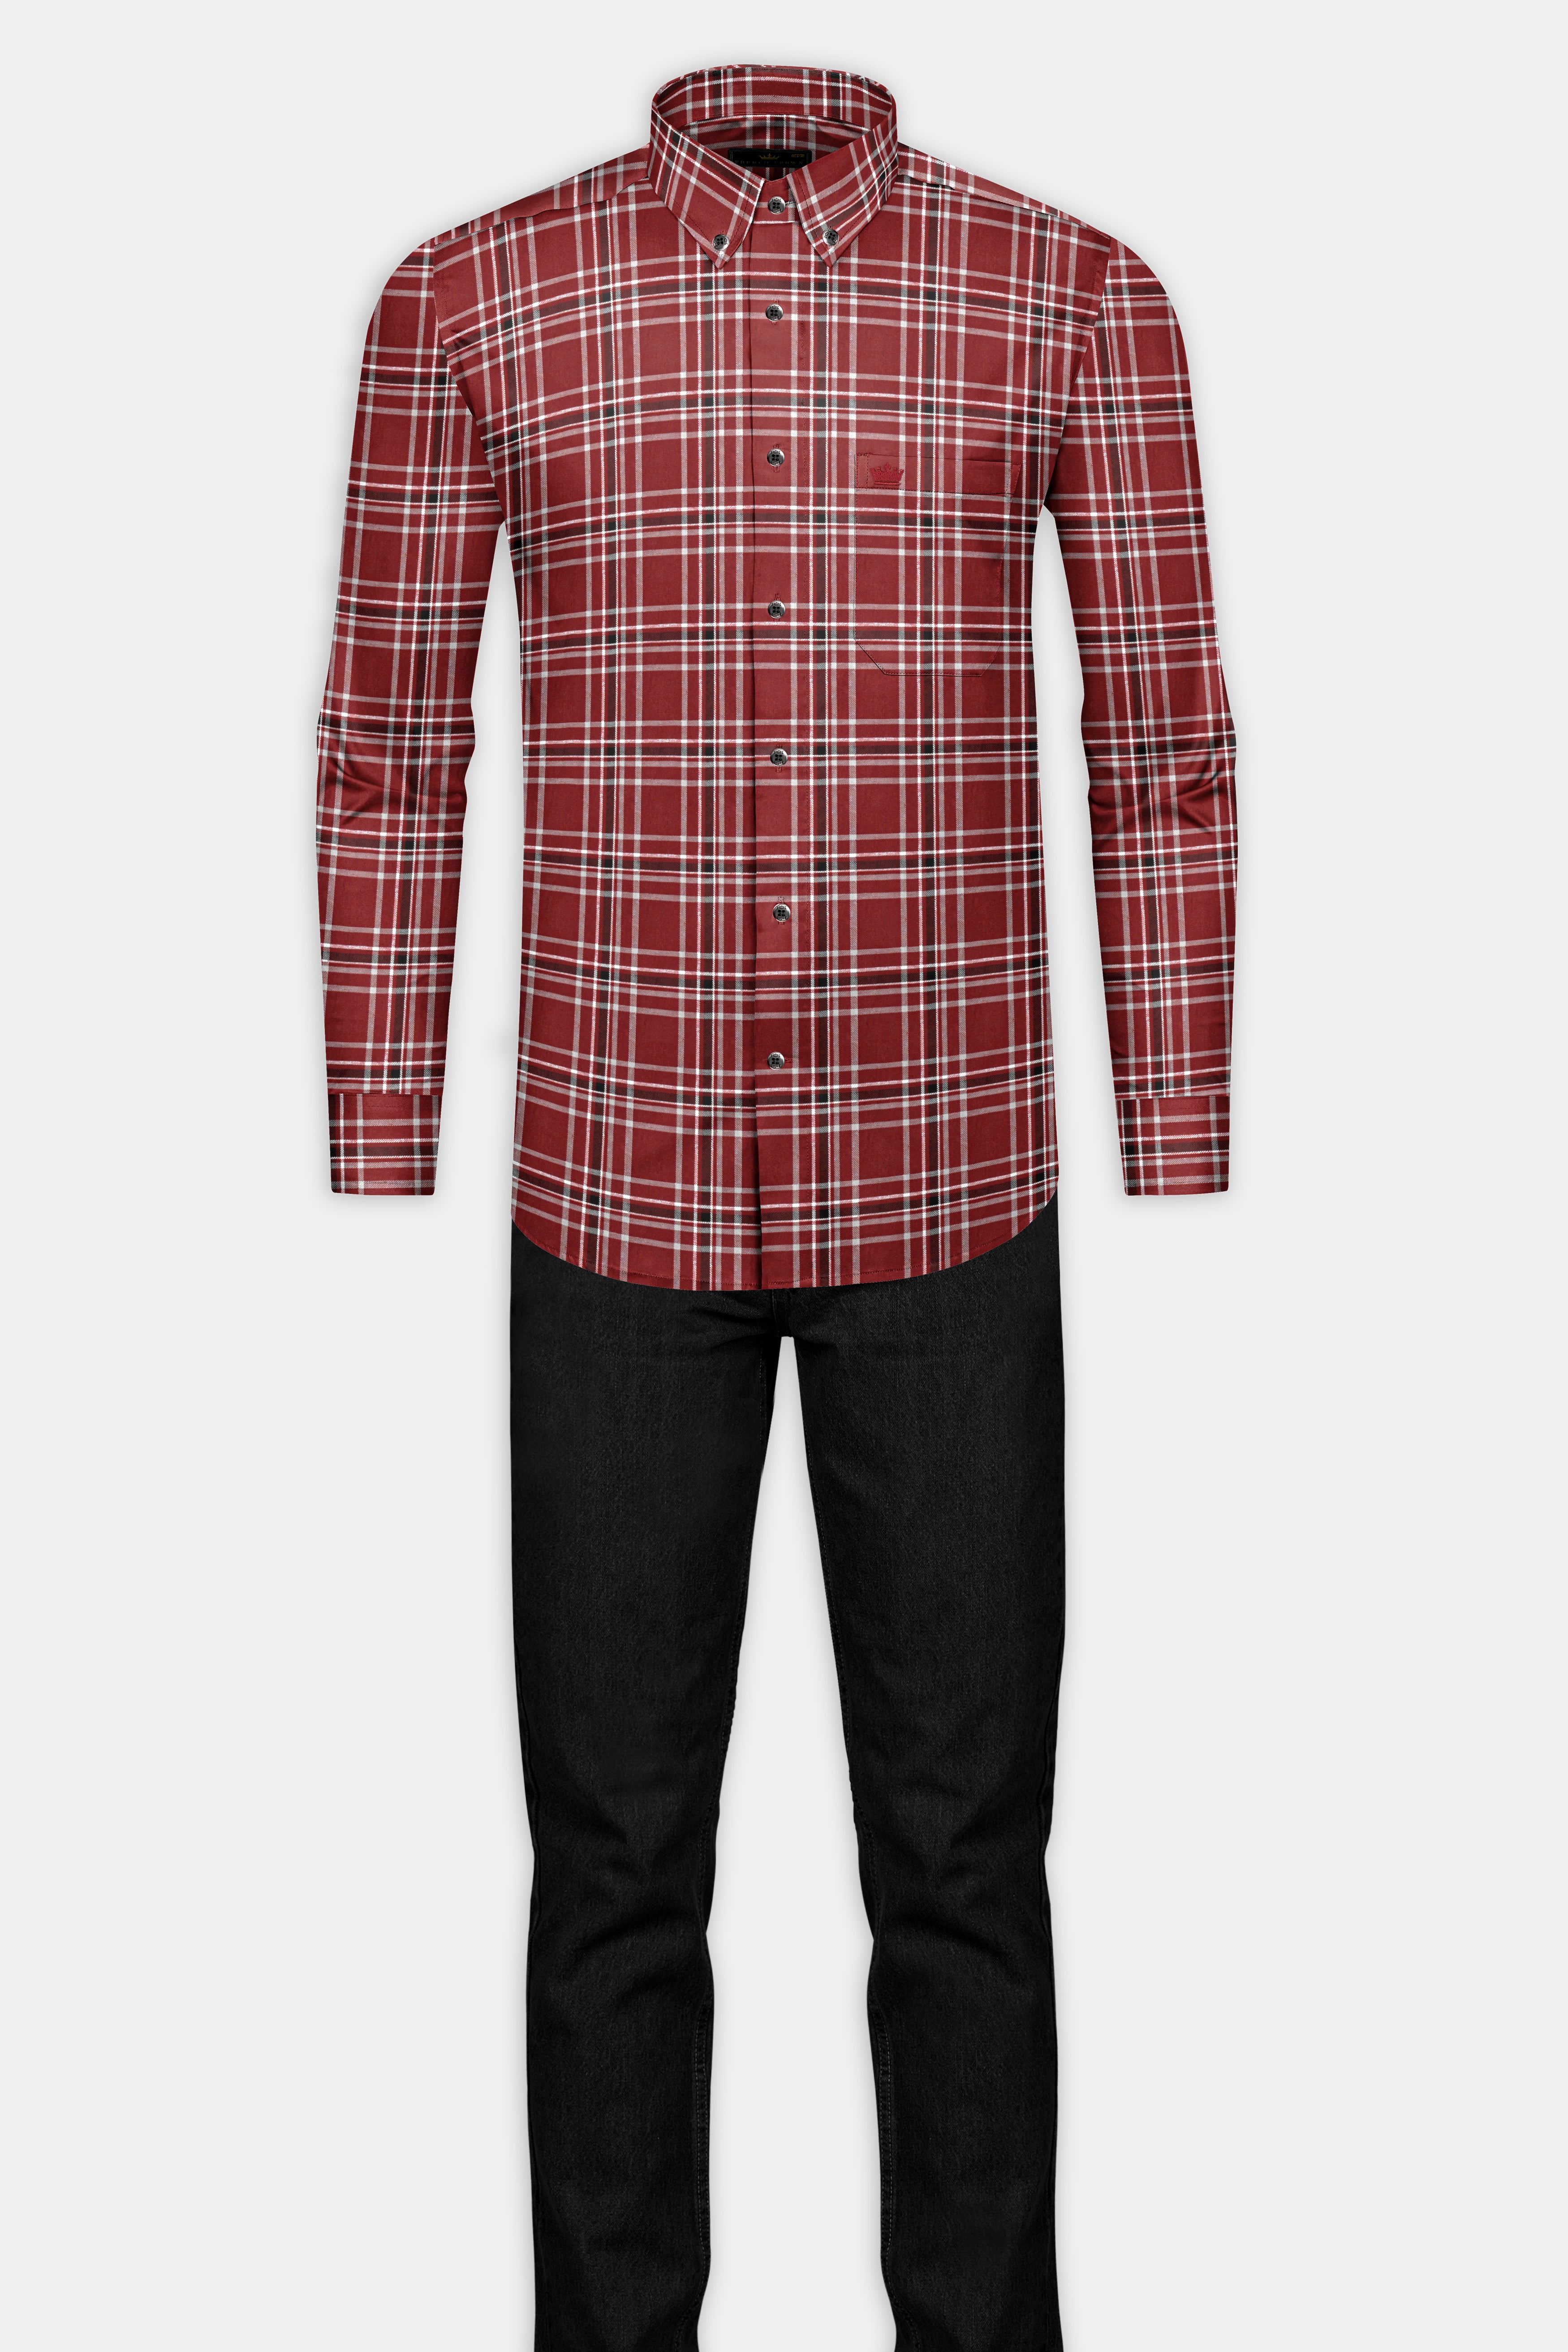 Cordovan Red Twill Windowpane Premium Cotton Shirt